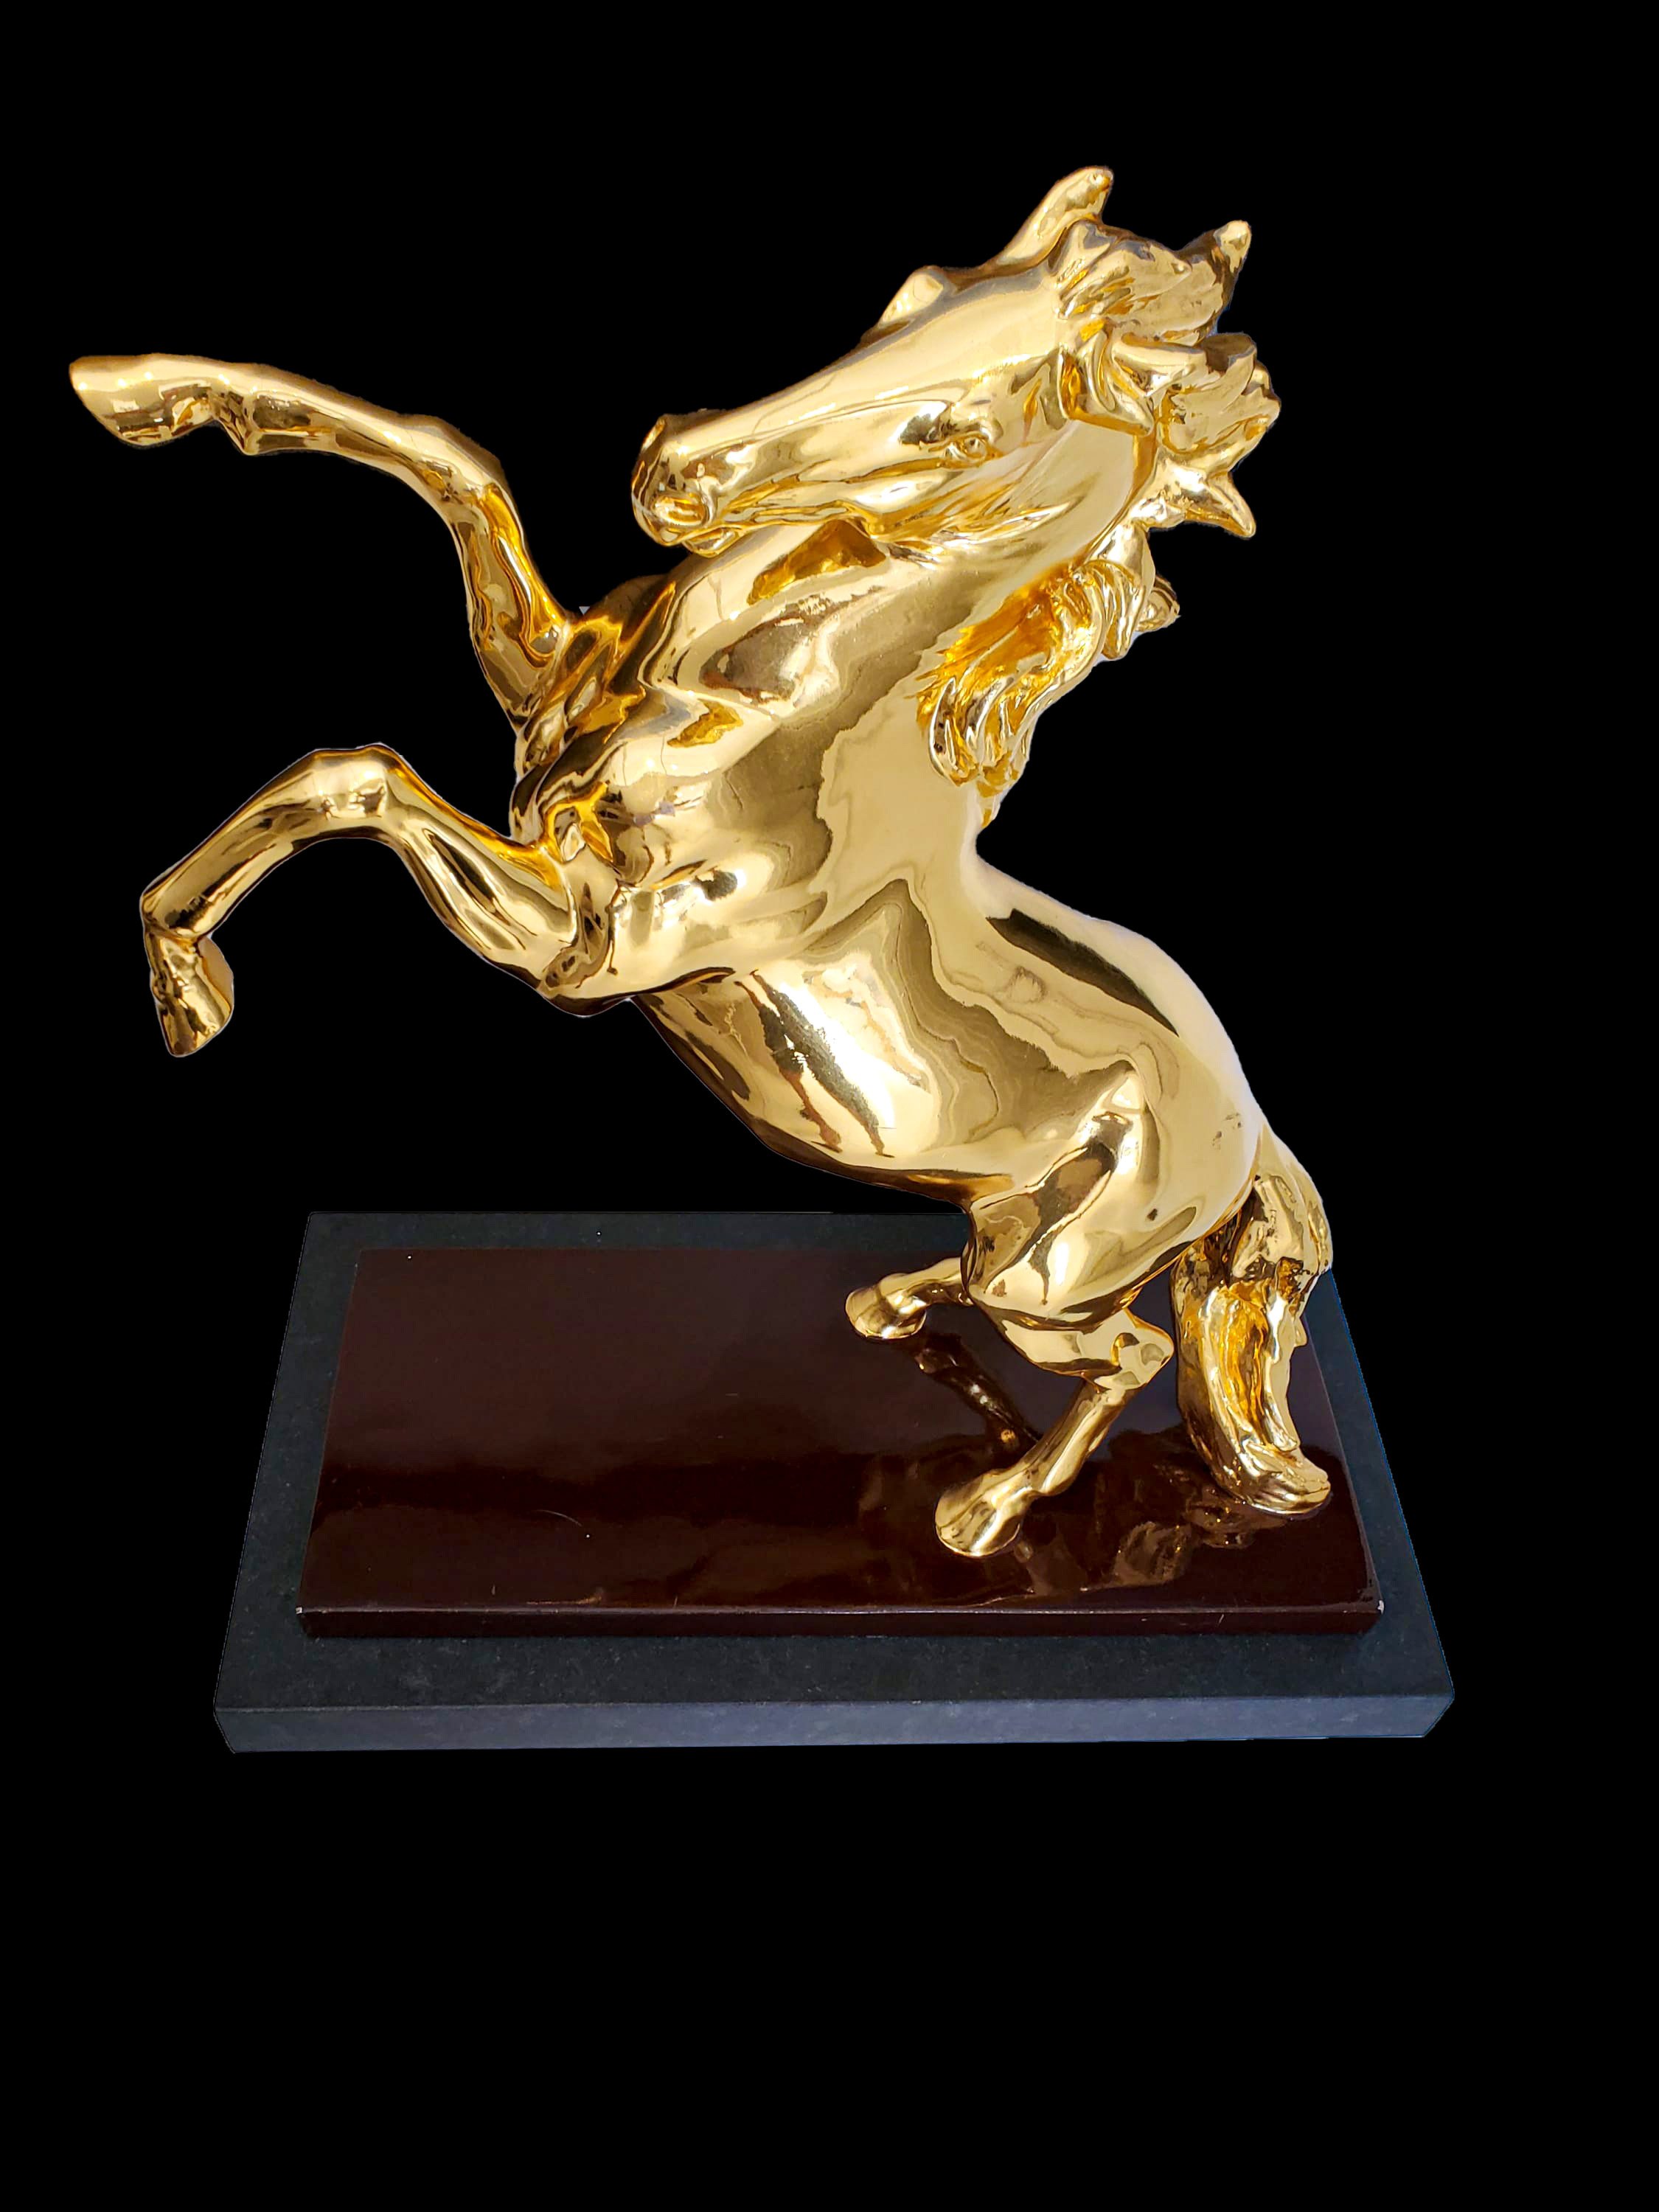 Golden Horse Caballo dorado gines serran pagan oscar molina gallery new york fine art southampton ny hamptons.jpg